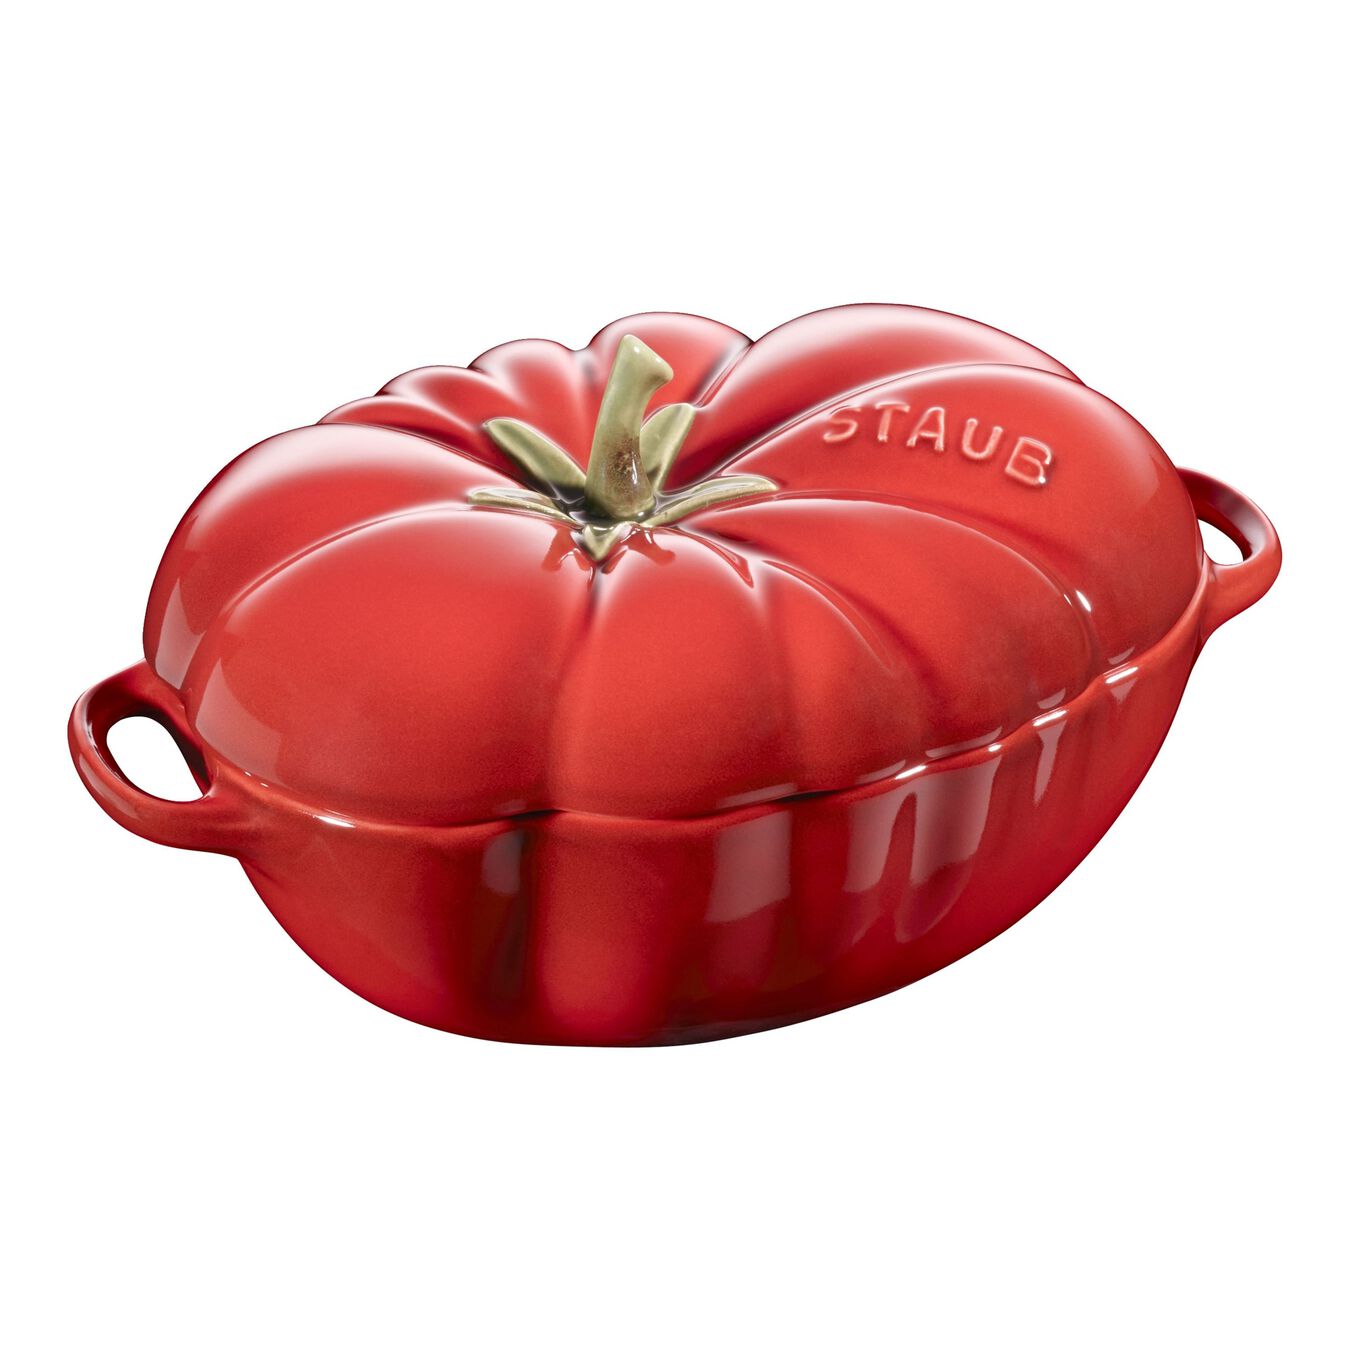 Cocotte 16 cm, Tomate, Kirsch-Rot, Keramik,,large 1